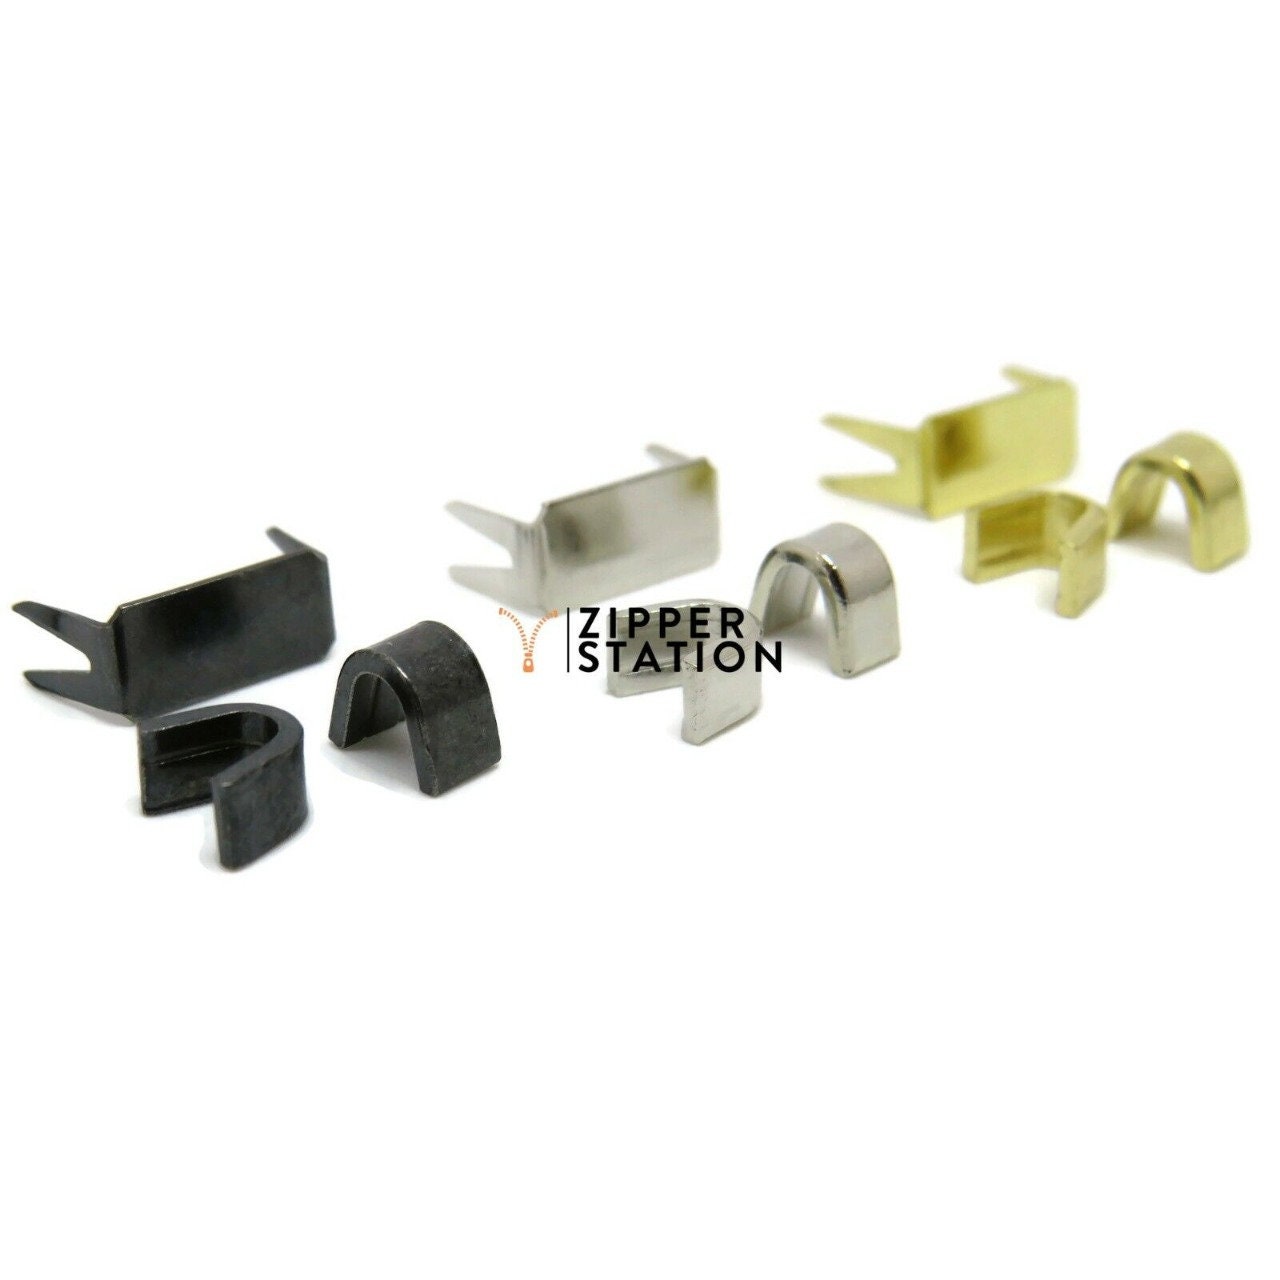 50 Pcs Aluminum Coil Sewing Machine Zipper Repair Kit Universal Fixer